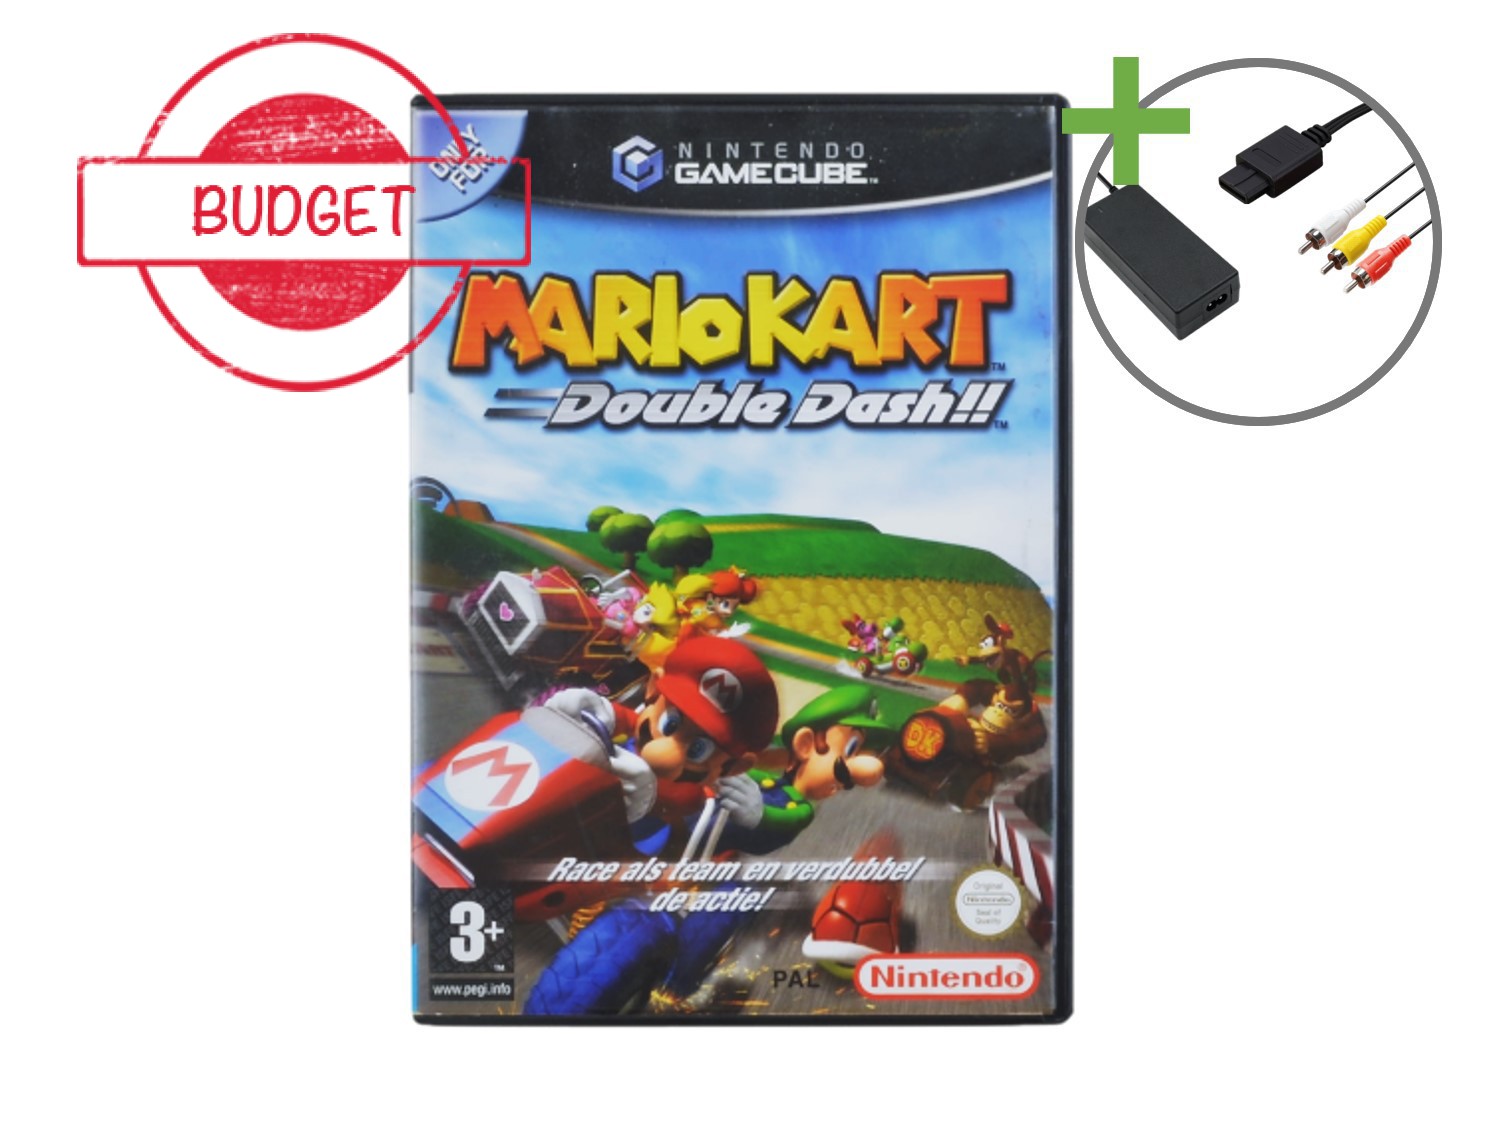 Nintendo Gamecube Starter Pack - Mario Kart Double Dash Edition - Budget - Gamecube Hardware - 4